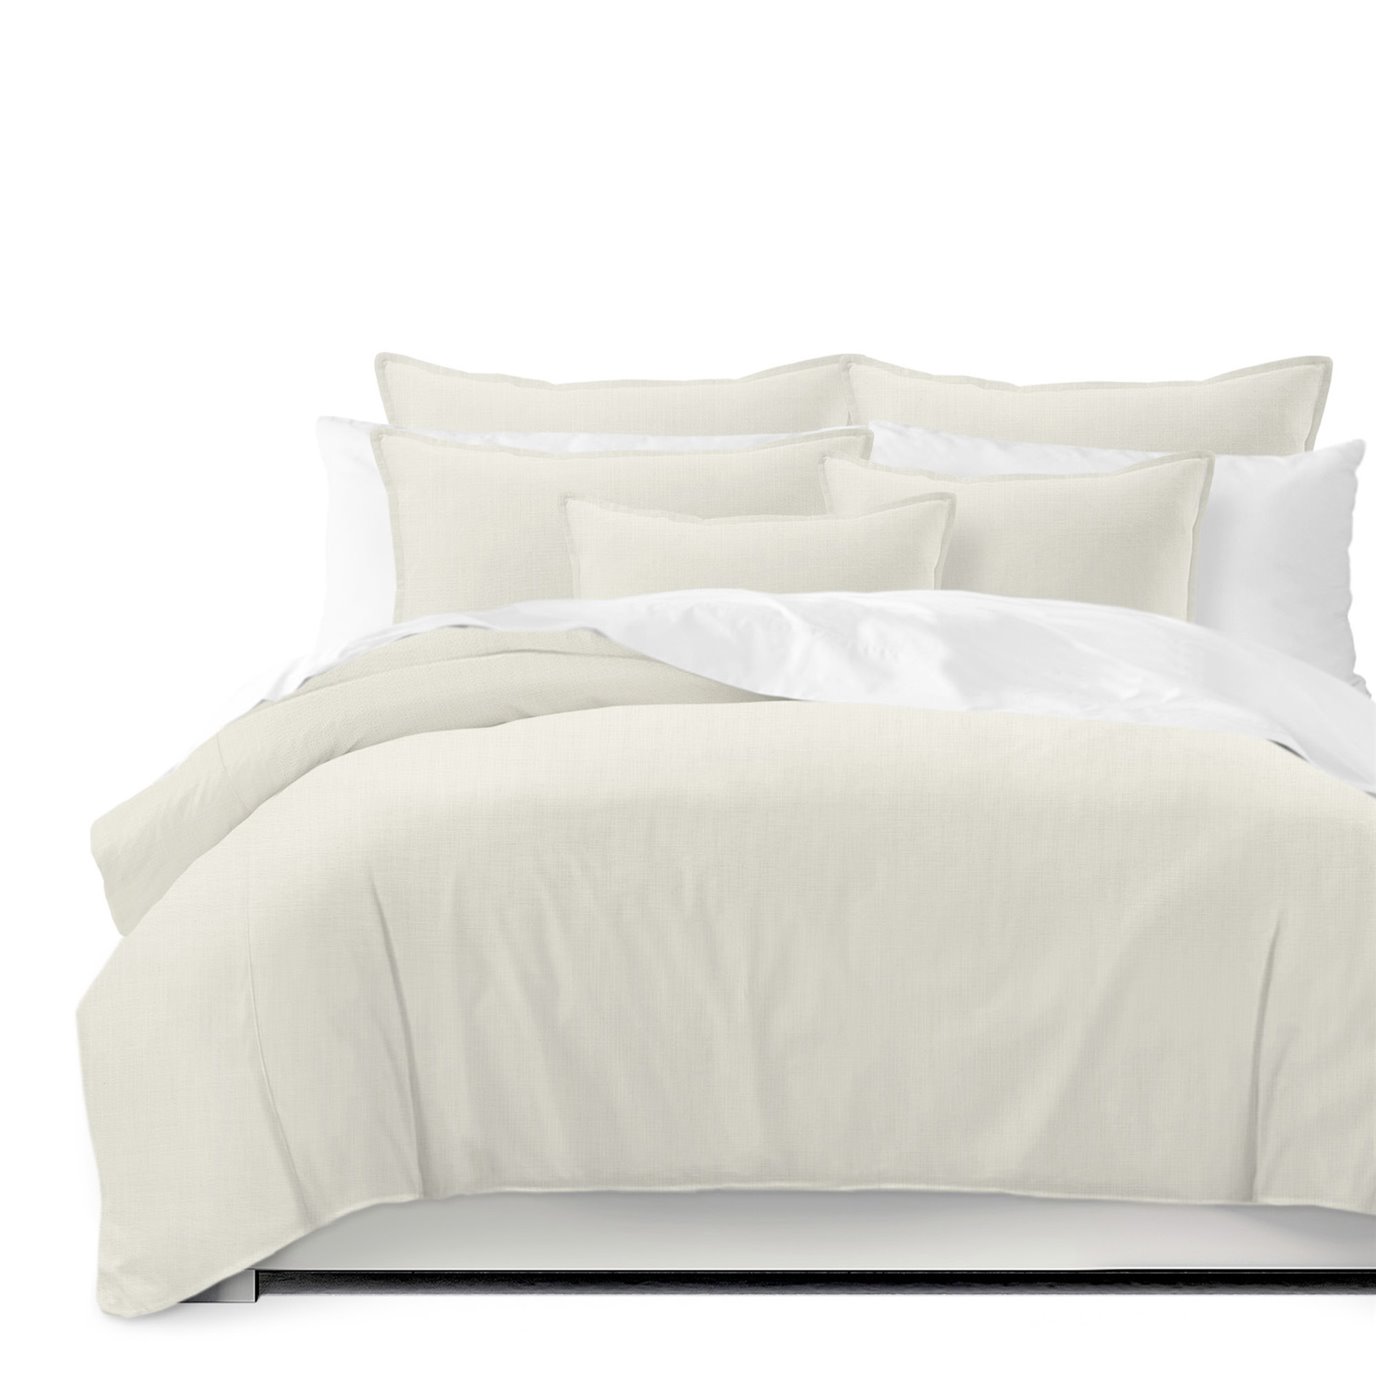 Ancebridge Vanilla Coverlet and Pillow Sham(s) Set - Size Full